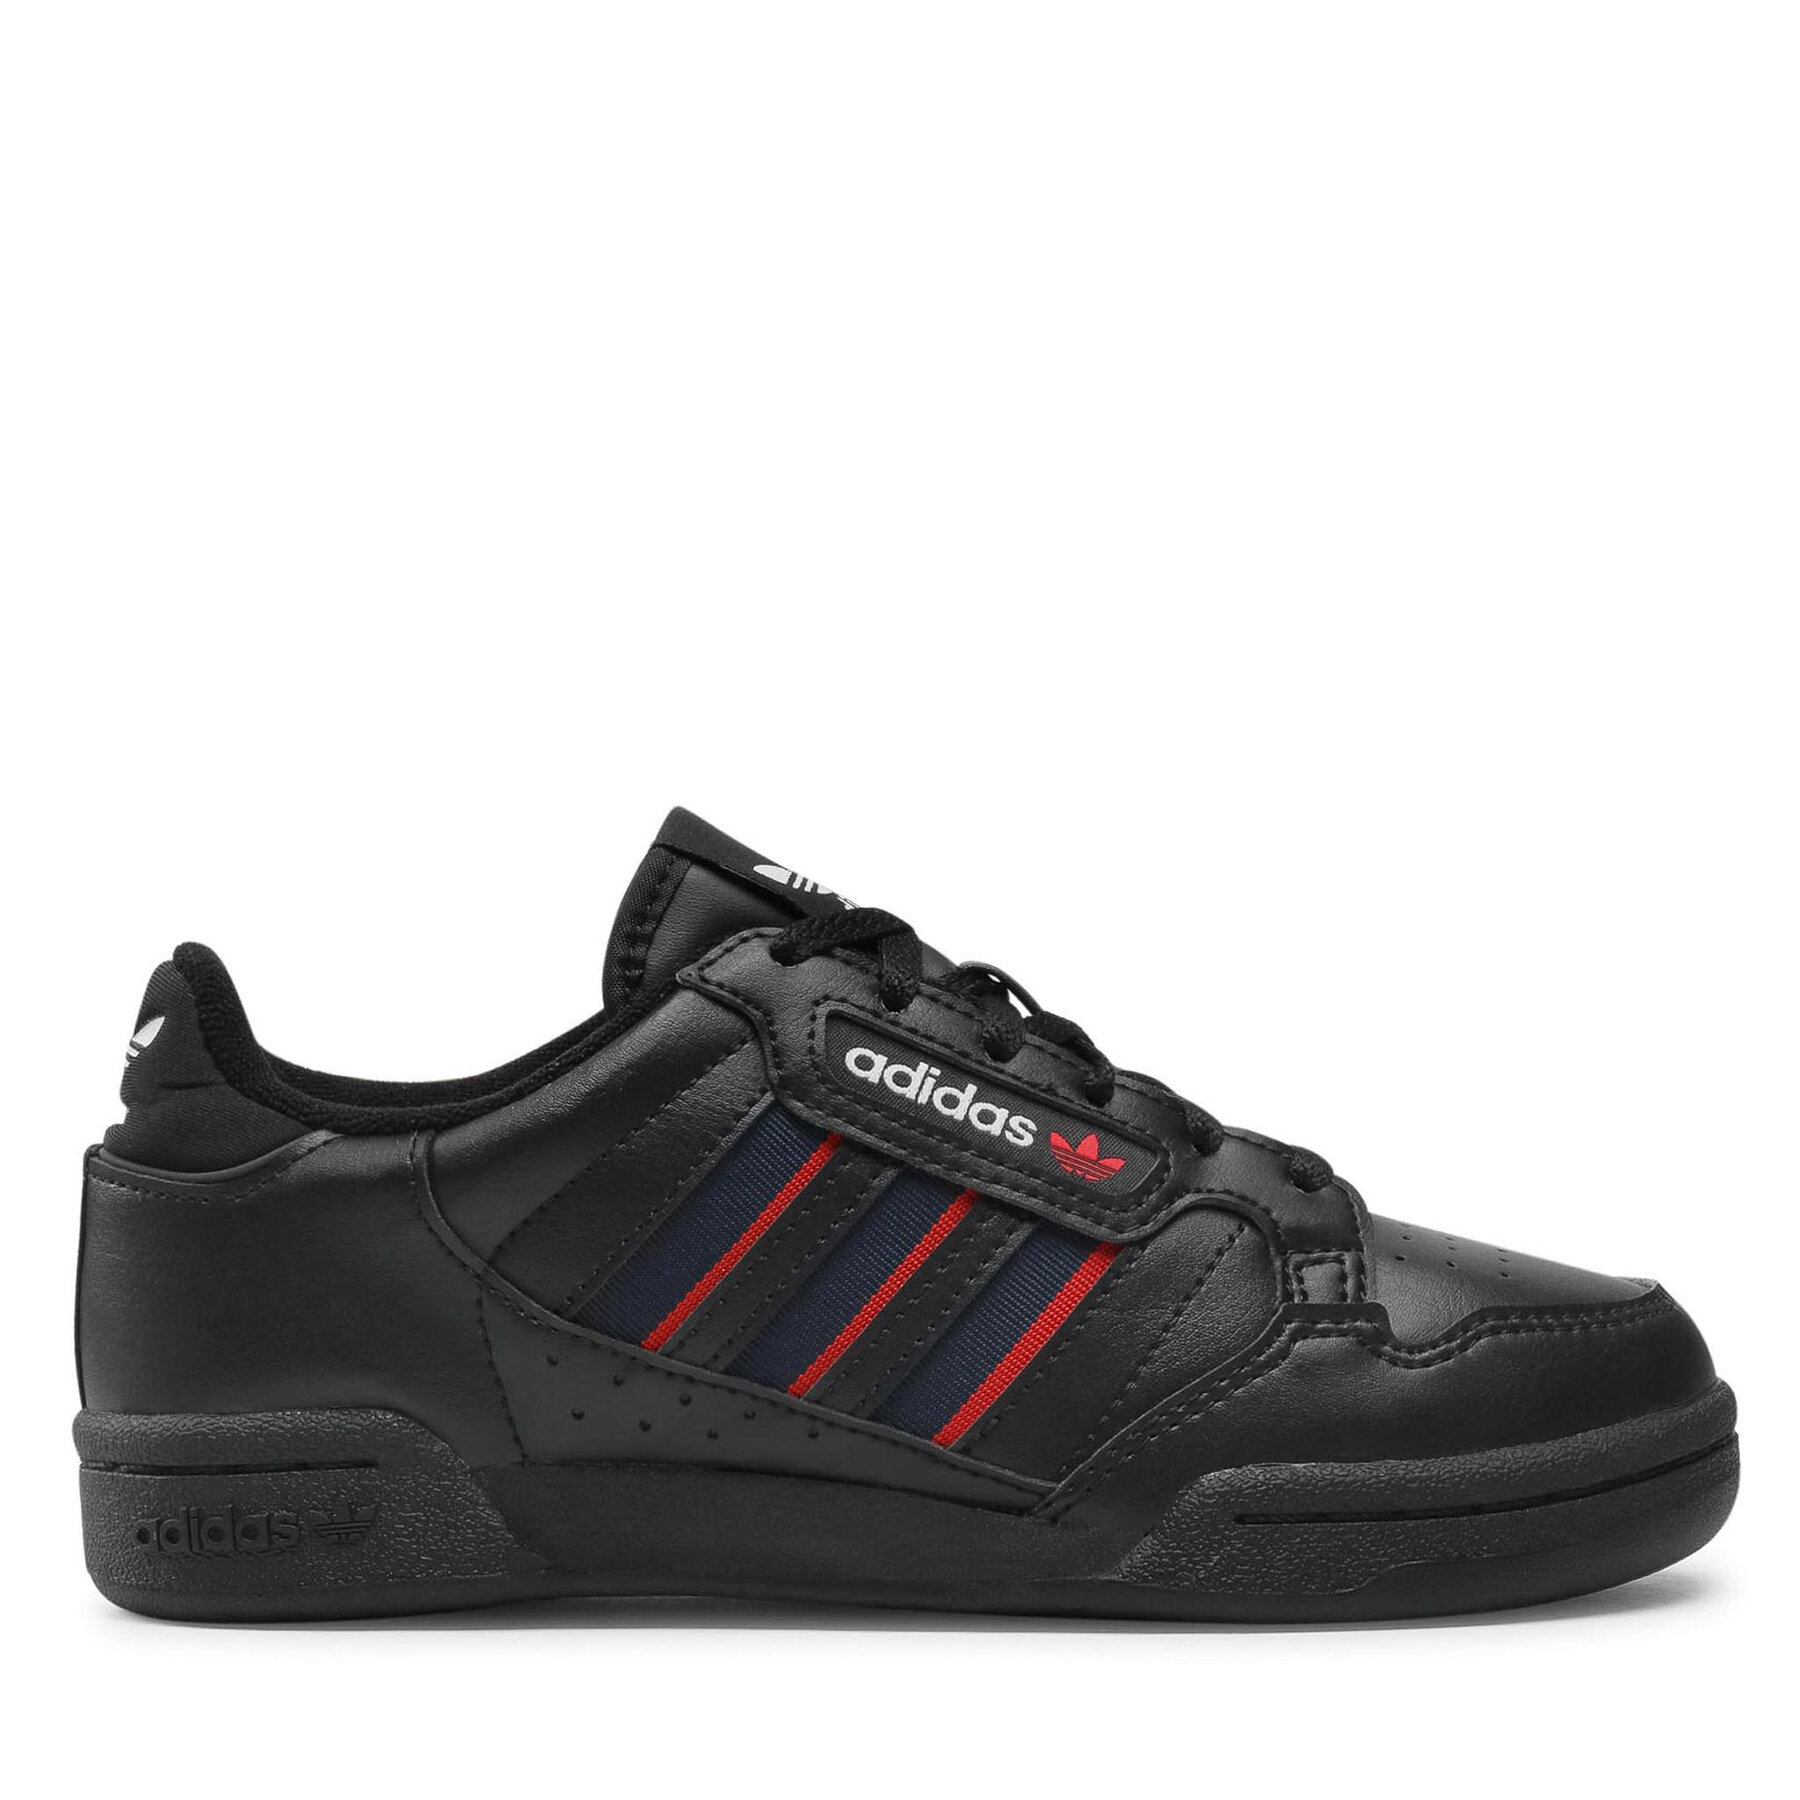 Comprar en oferta Adidas Continental 80 Stripes Kids Core Black/Collegiate Navy/Vivid Red